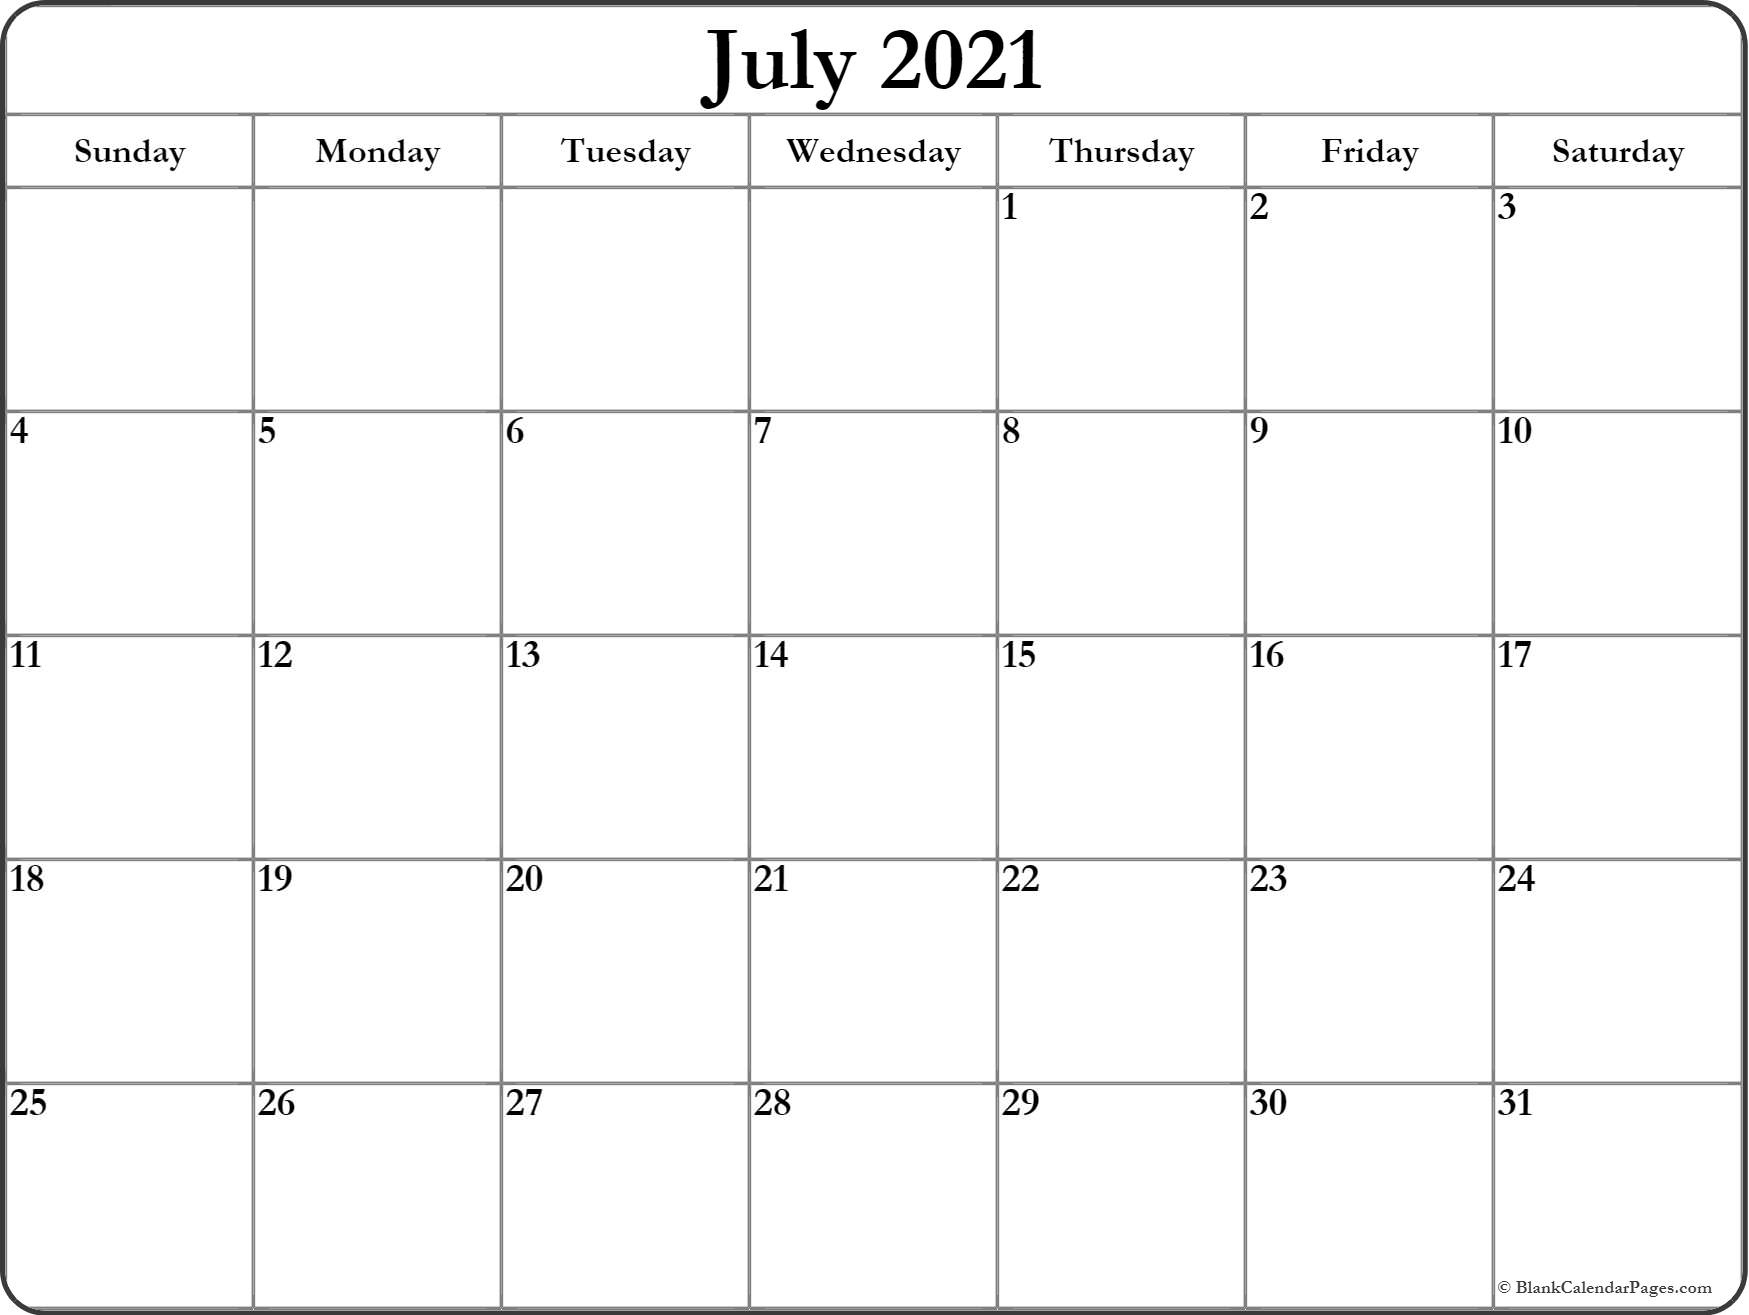 July 2021 Calendar | Free Printable Calendar Online Calendar July 2021